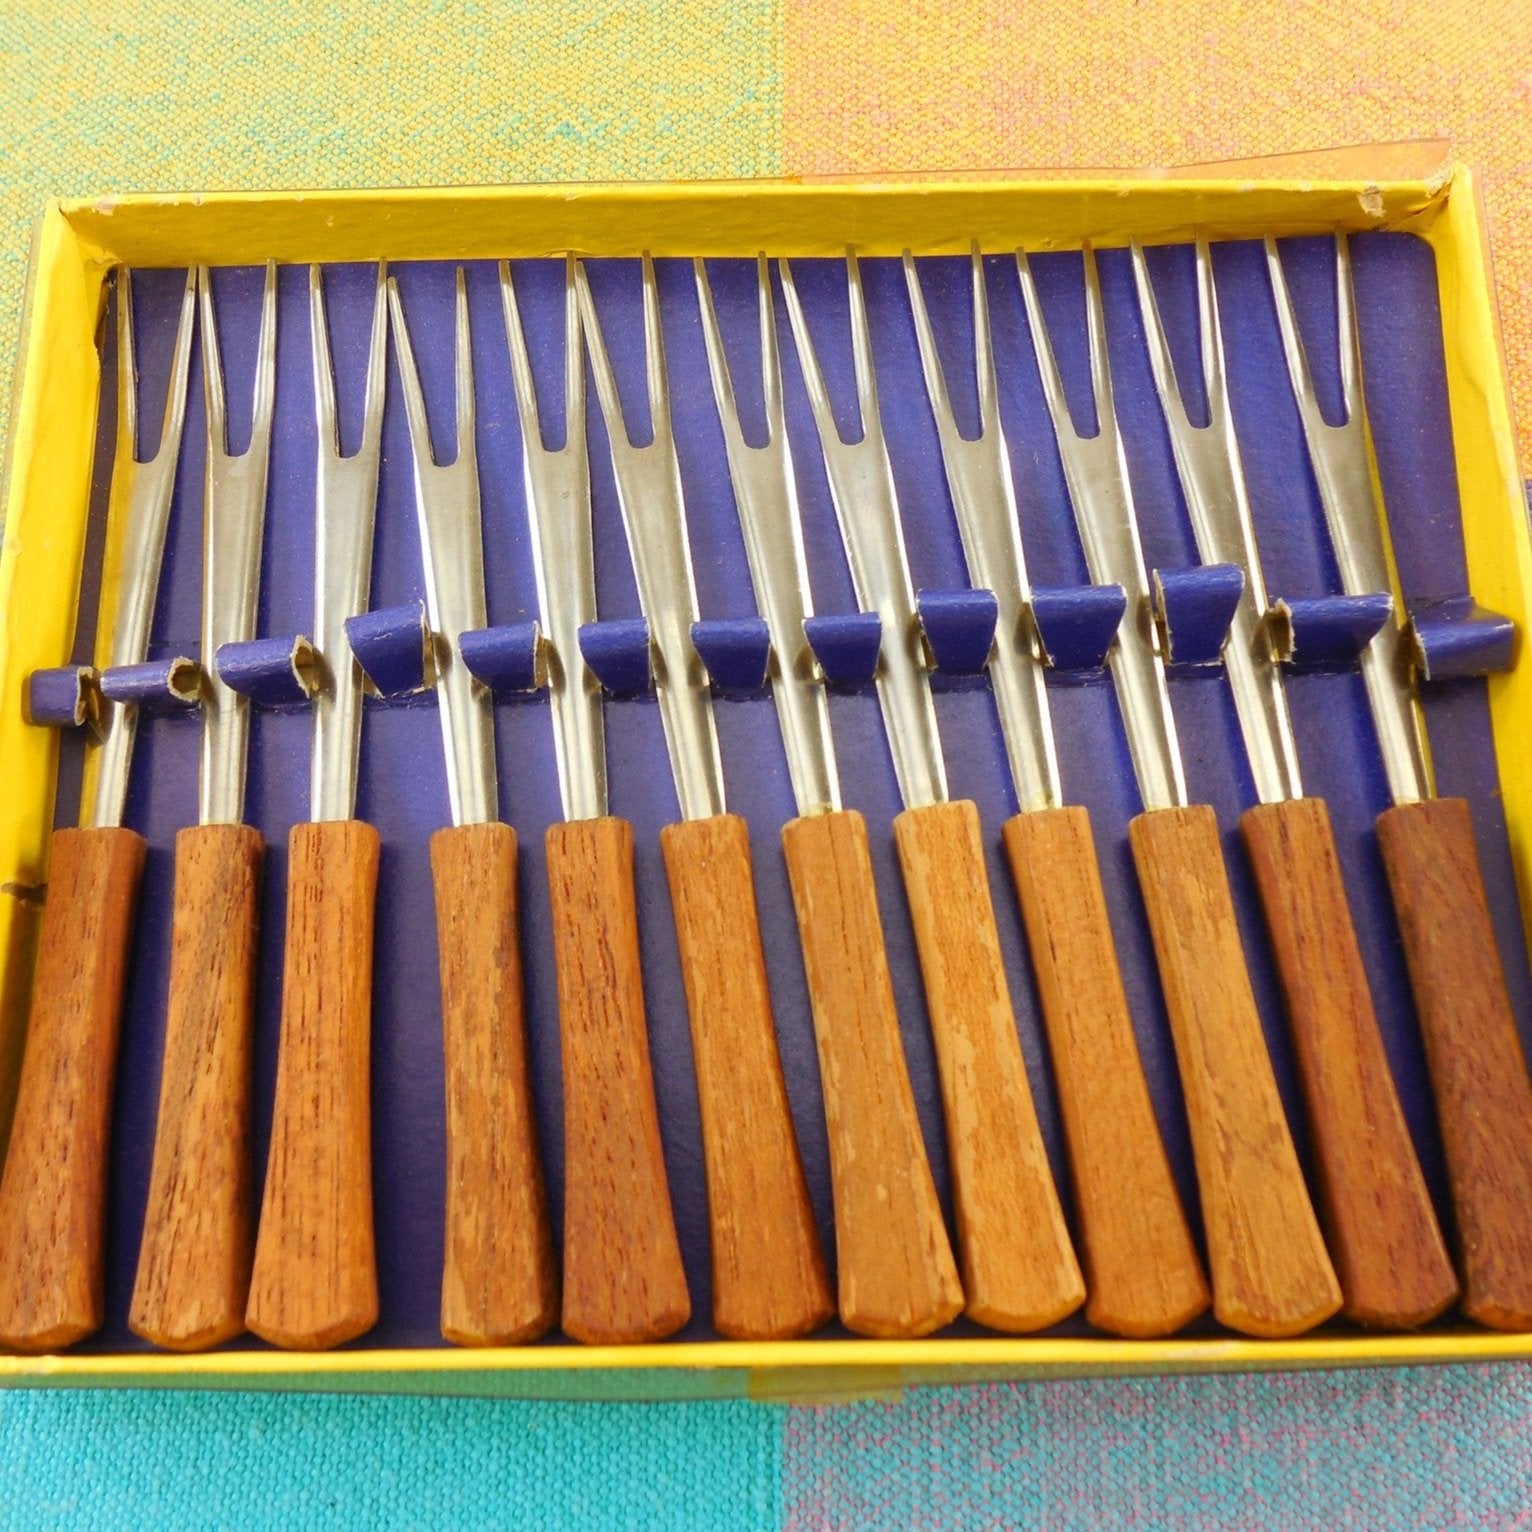 Hors devours Cheese Cocktail Forks Picks - 12 Set Teak Handles Stainless  Vintagel Forks Picks 